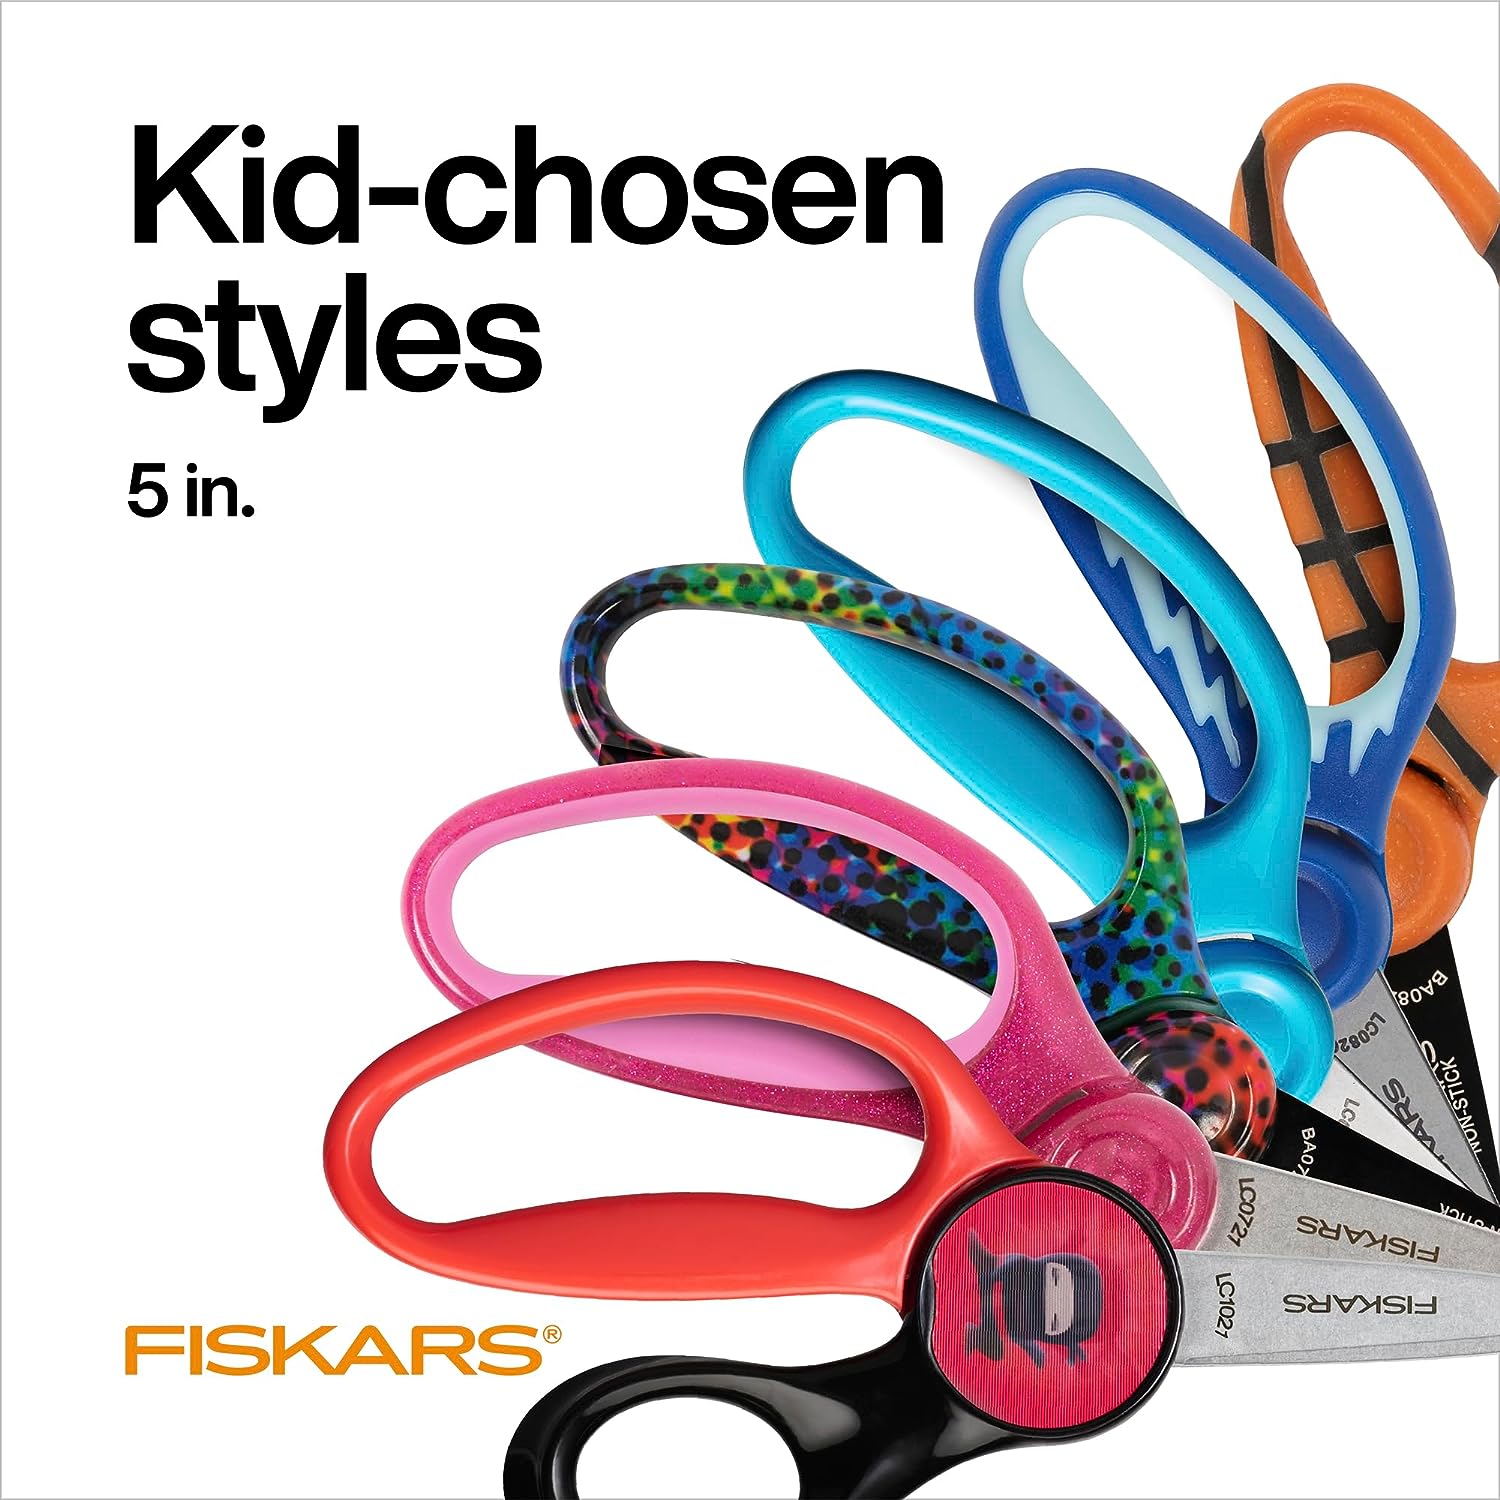 Fiskars® Blunt-tip Kids Scissors, Blue (5 in.)